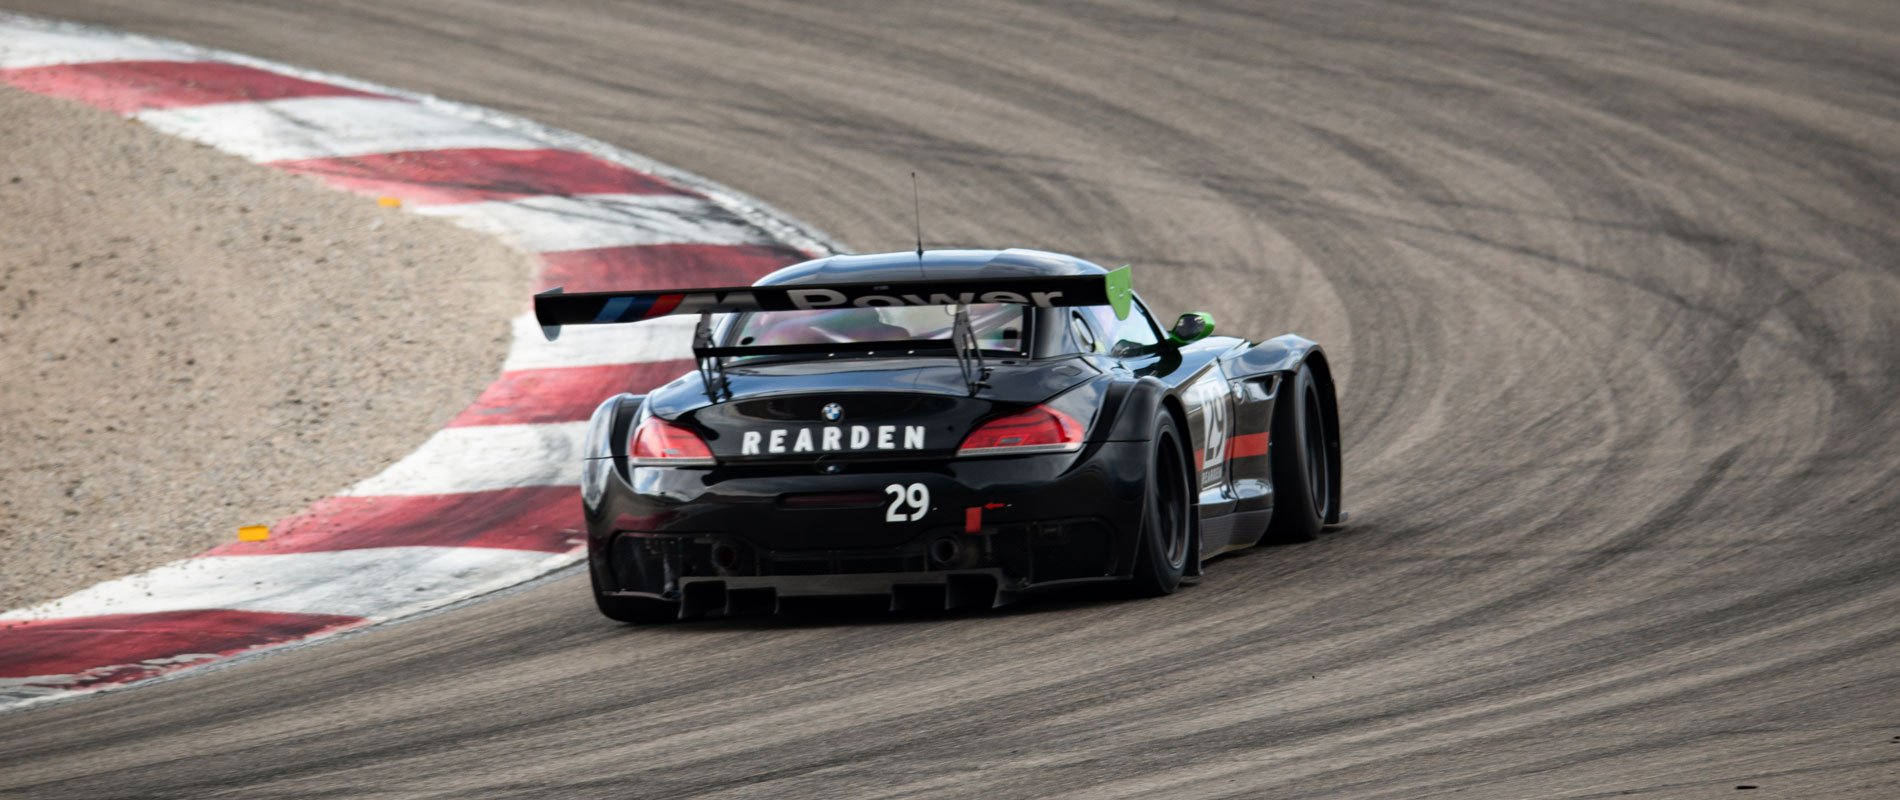 BMW GT3 race car